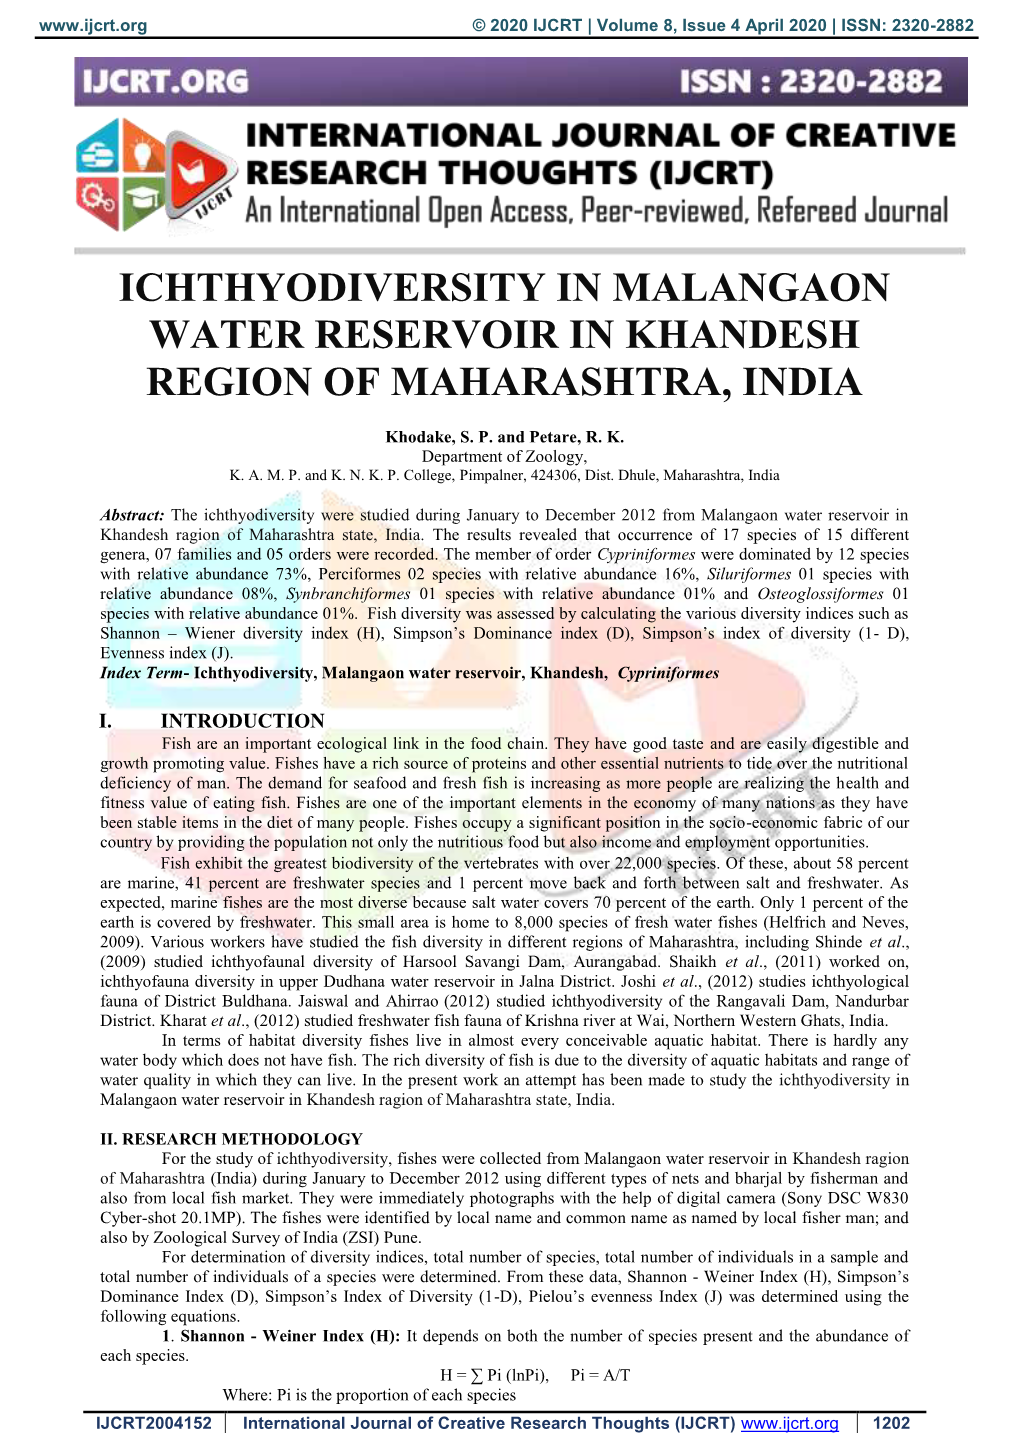 Ichthyodiversity in Malangaon Water Reservoir in Khandesh Region of Maharashtra, India